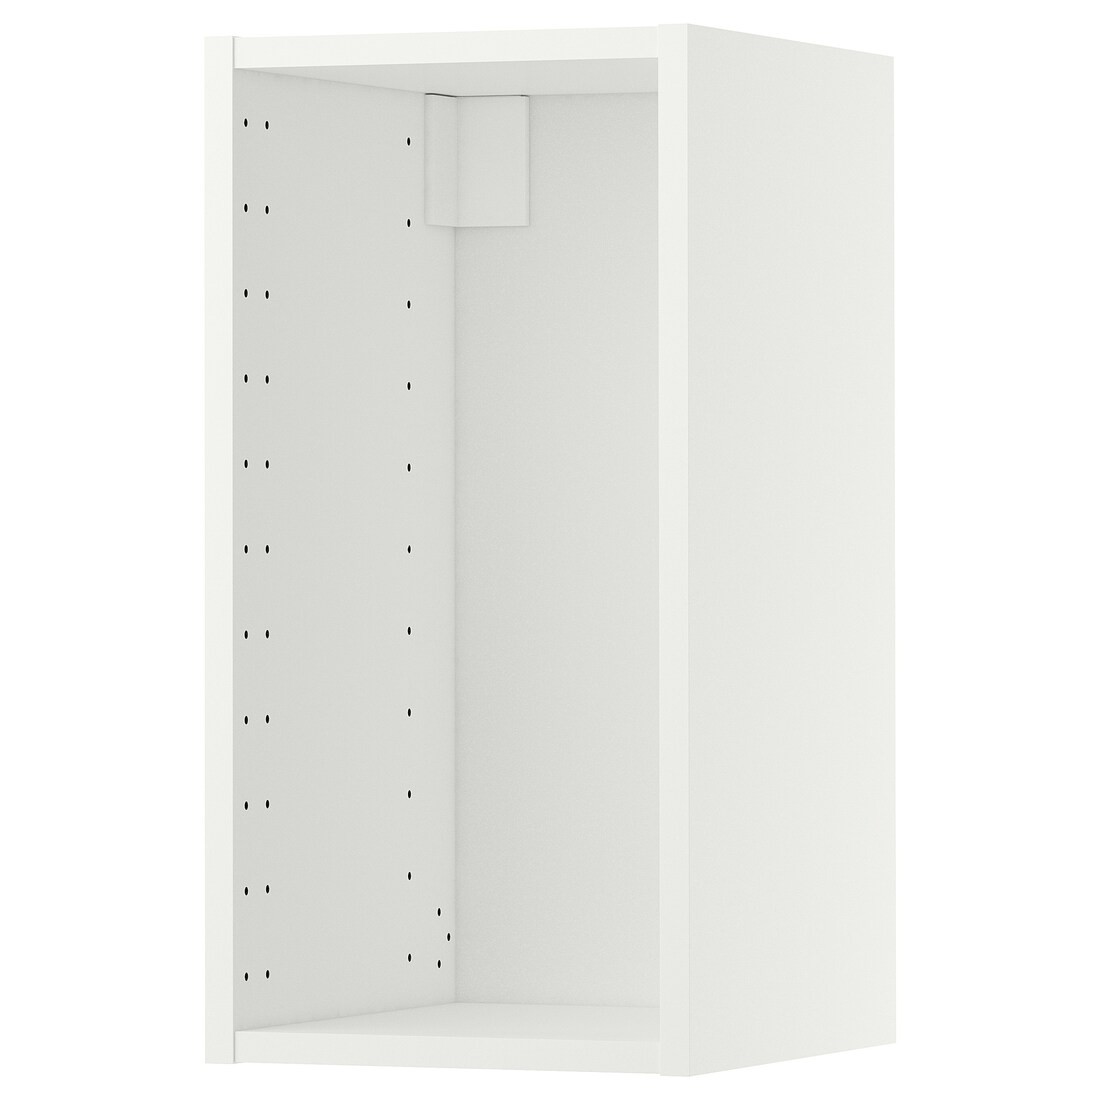 IKEA METOD МЕТОД Каркас навесного шкафа, белый, 30x37x60 см 40421051 404.210.51